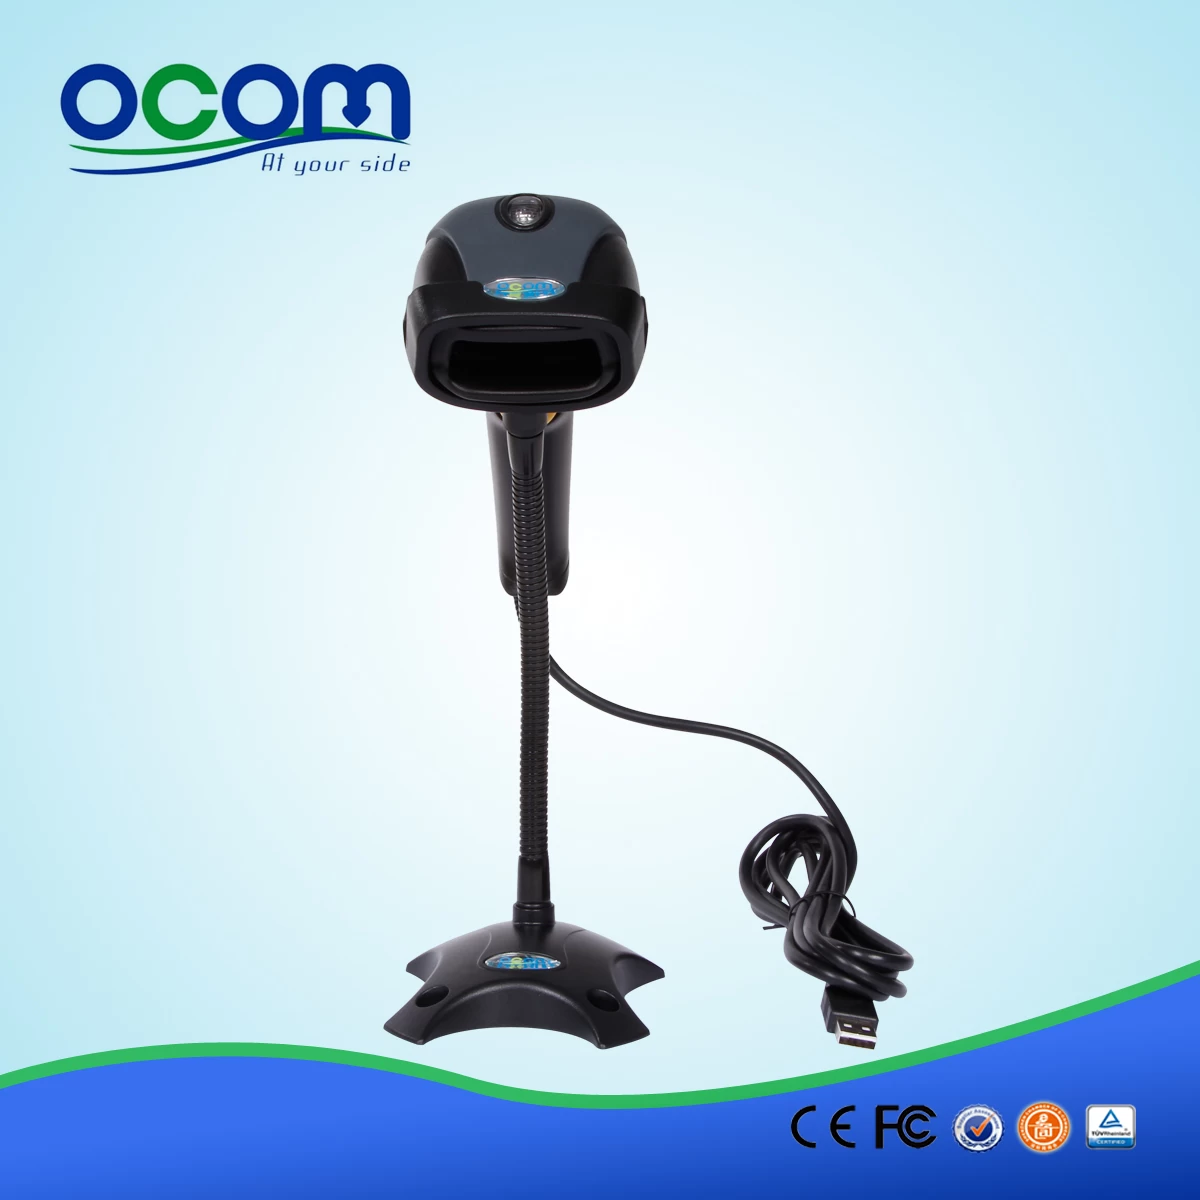 (OCBS-LA09) High Level Auto Sense Handheld Barcode Scanner With Stand